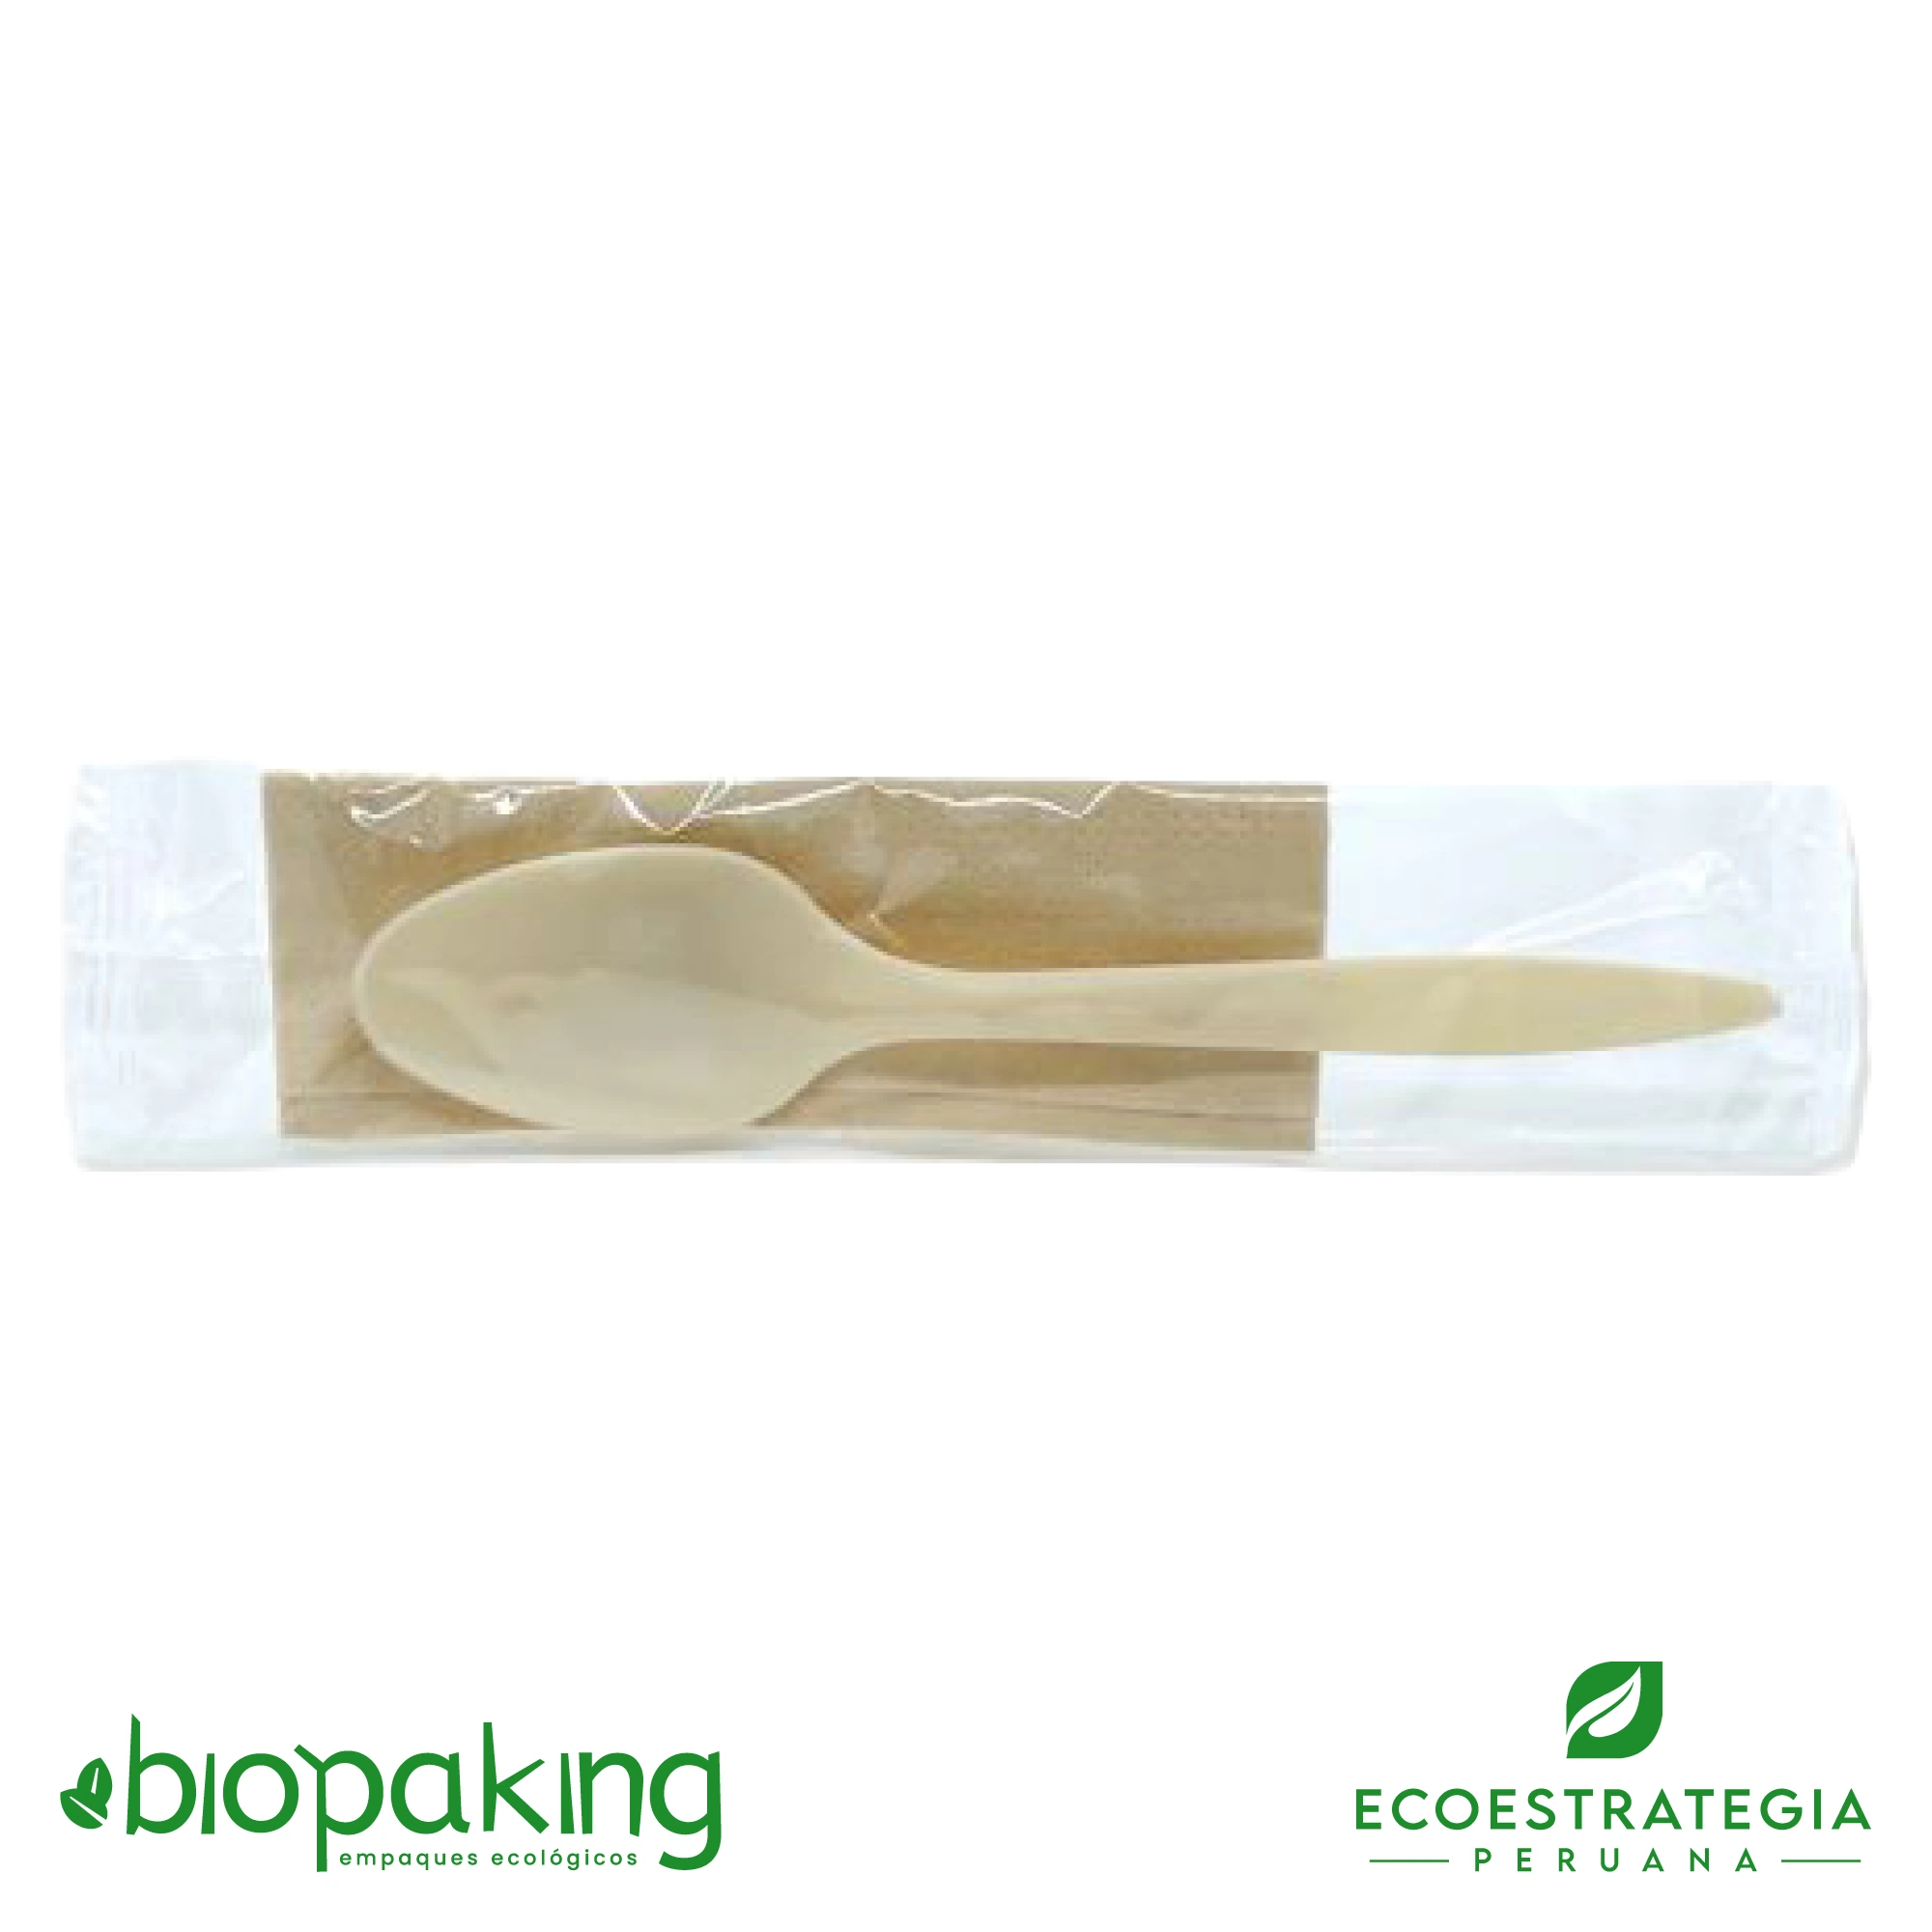 Empaque de cuchara biodegradable fecula de maiz con servilleta, EP-CS. Cotiza ahora tus empaques de cuchara biodegradable más servilleta al mejor precio en Perú.